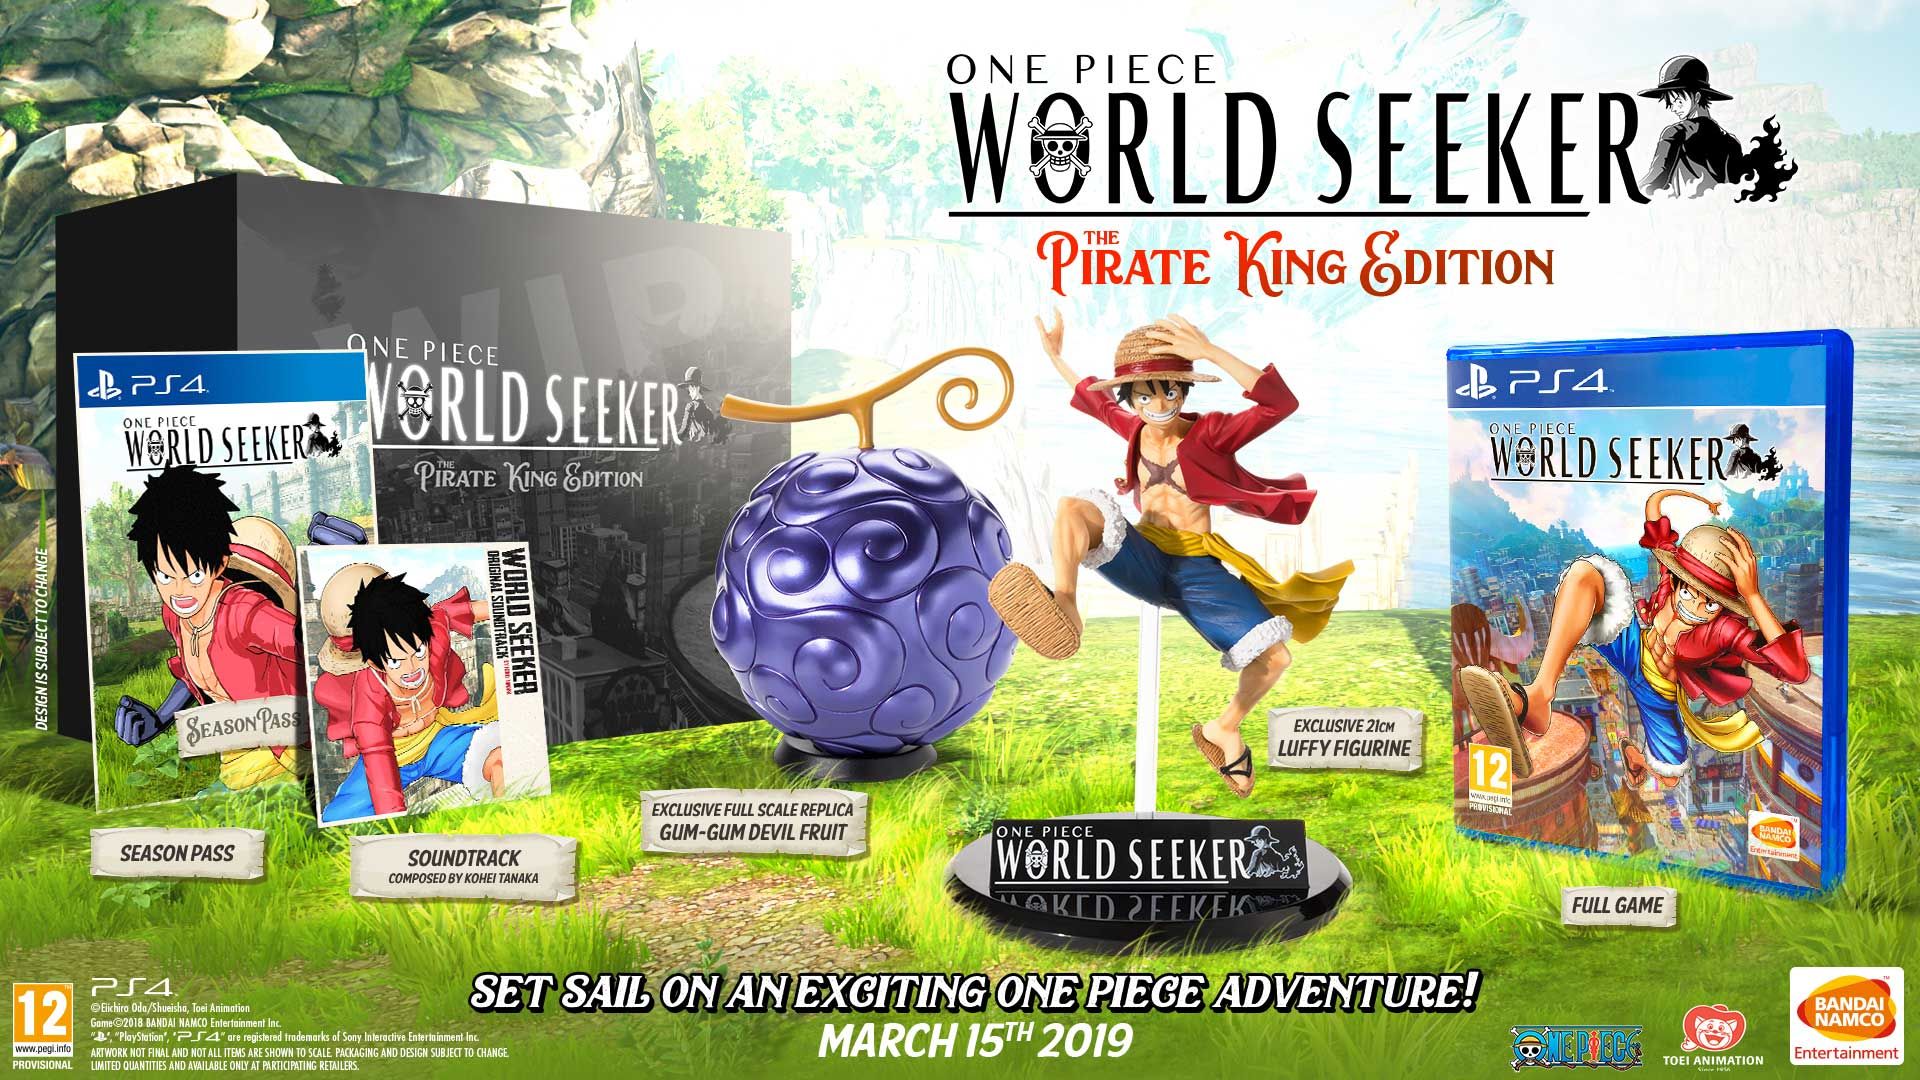 One Piece World Seeker Pirate King